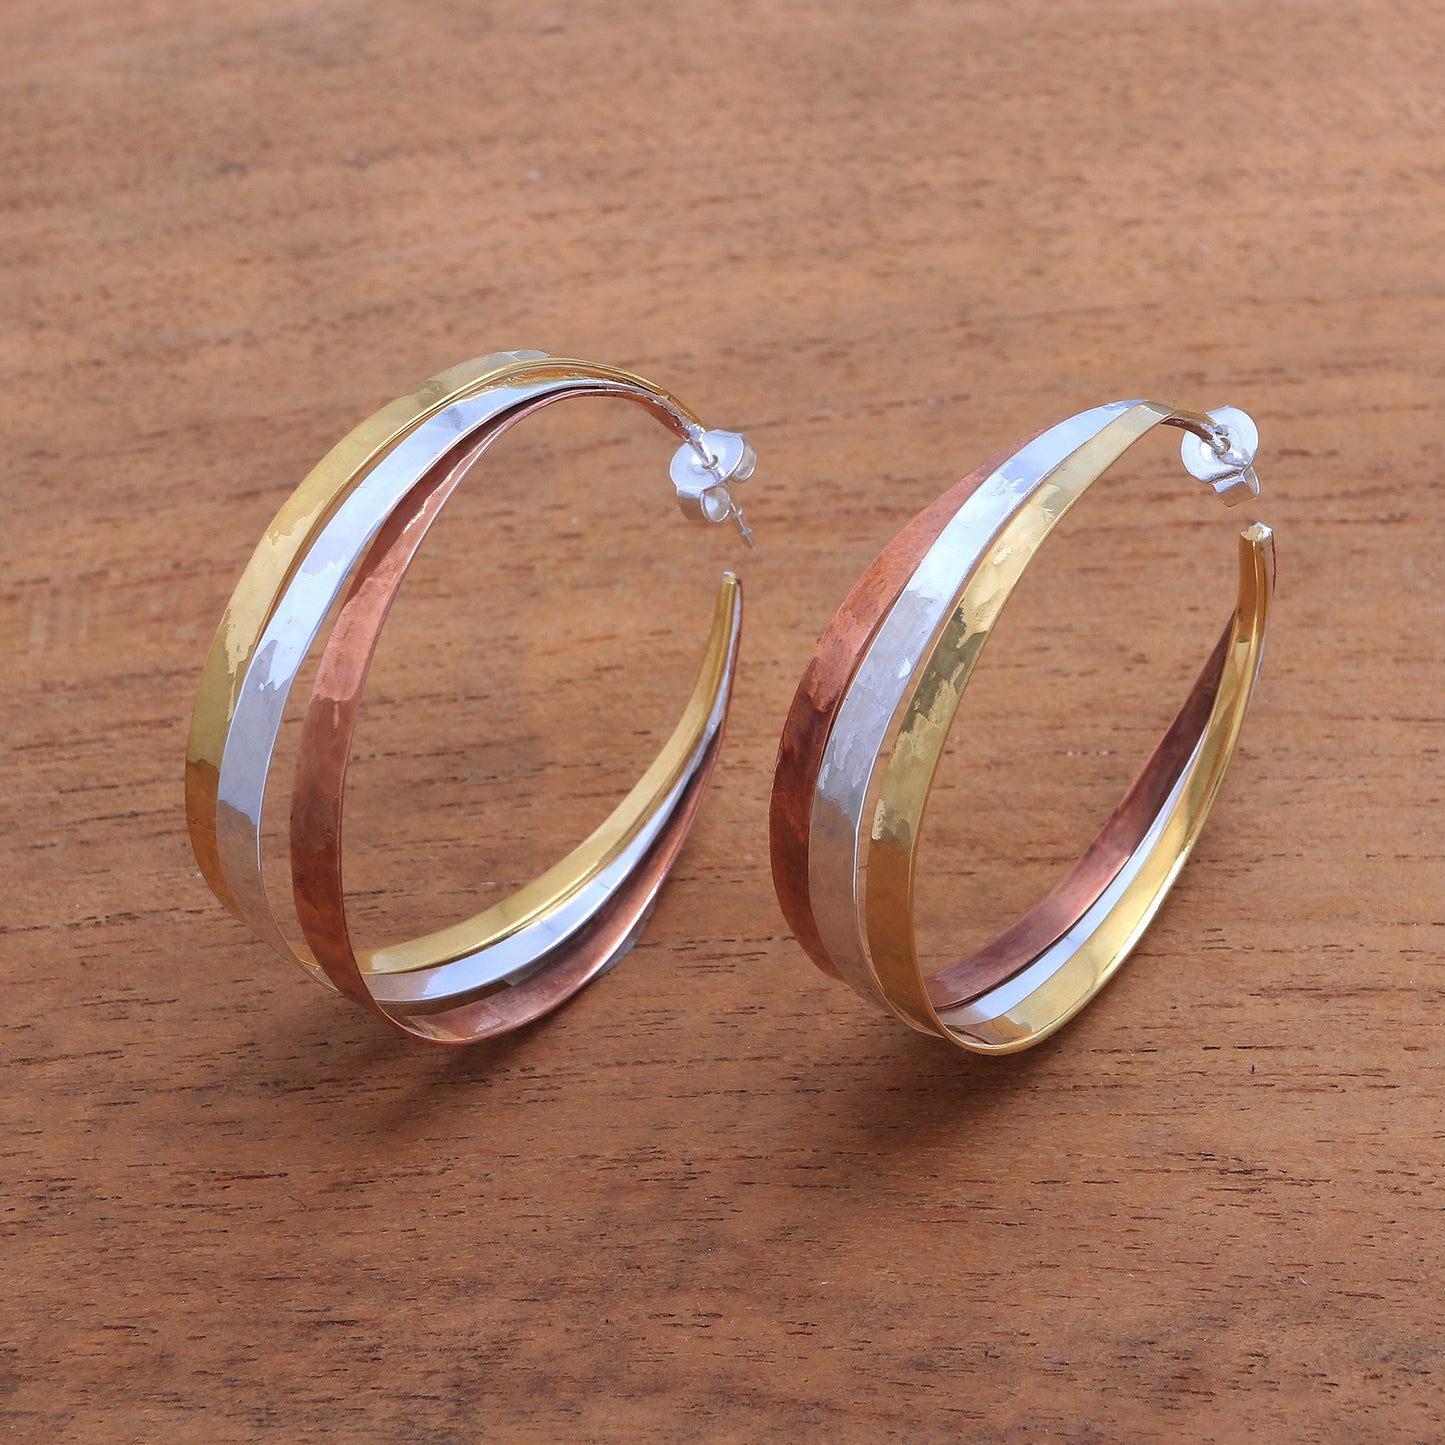 Metallic Rainbow Gold Accent Sterling Silver Half-Hoop Earrings from Bali